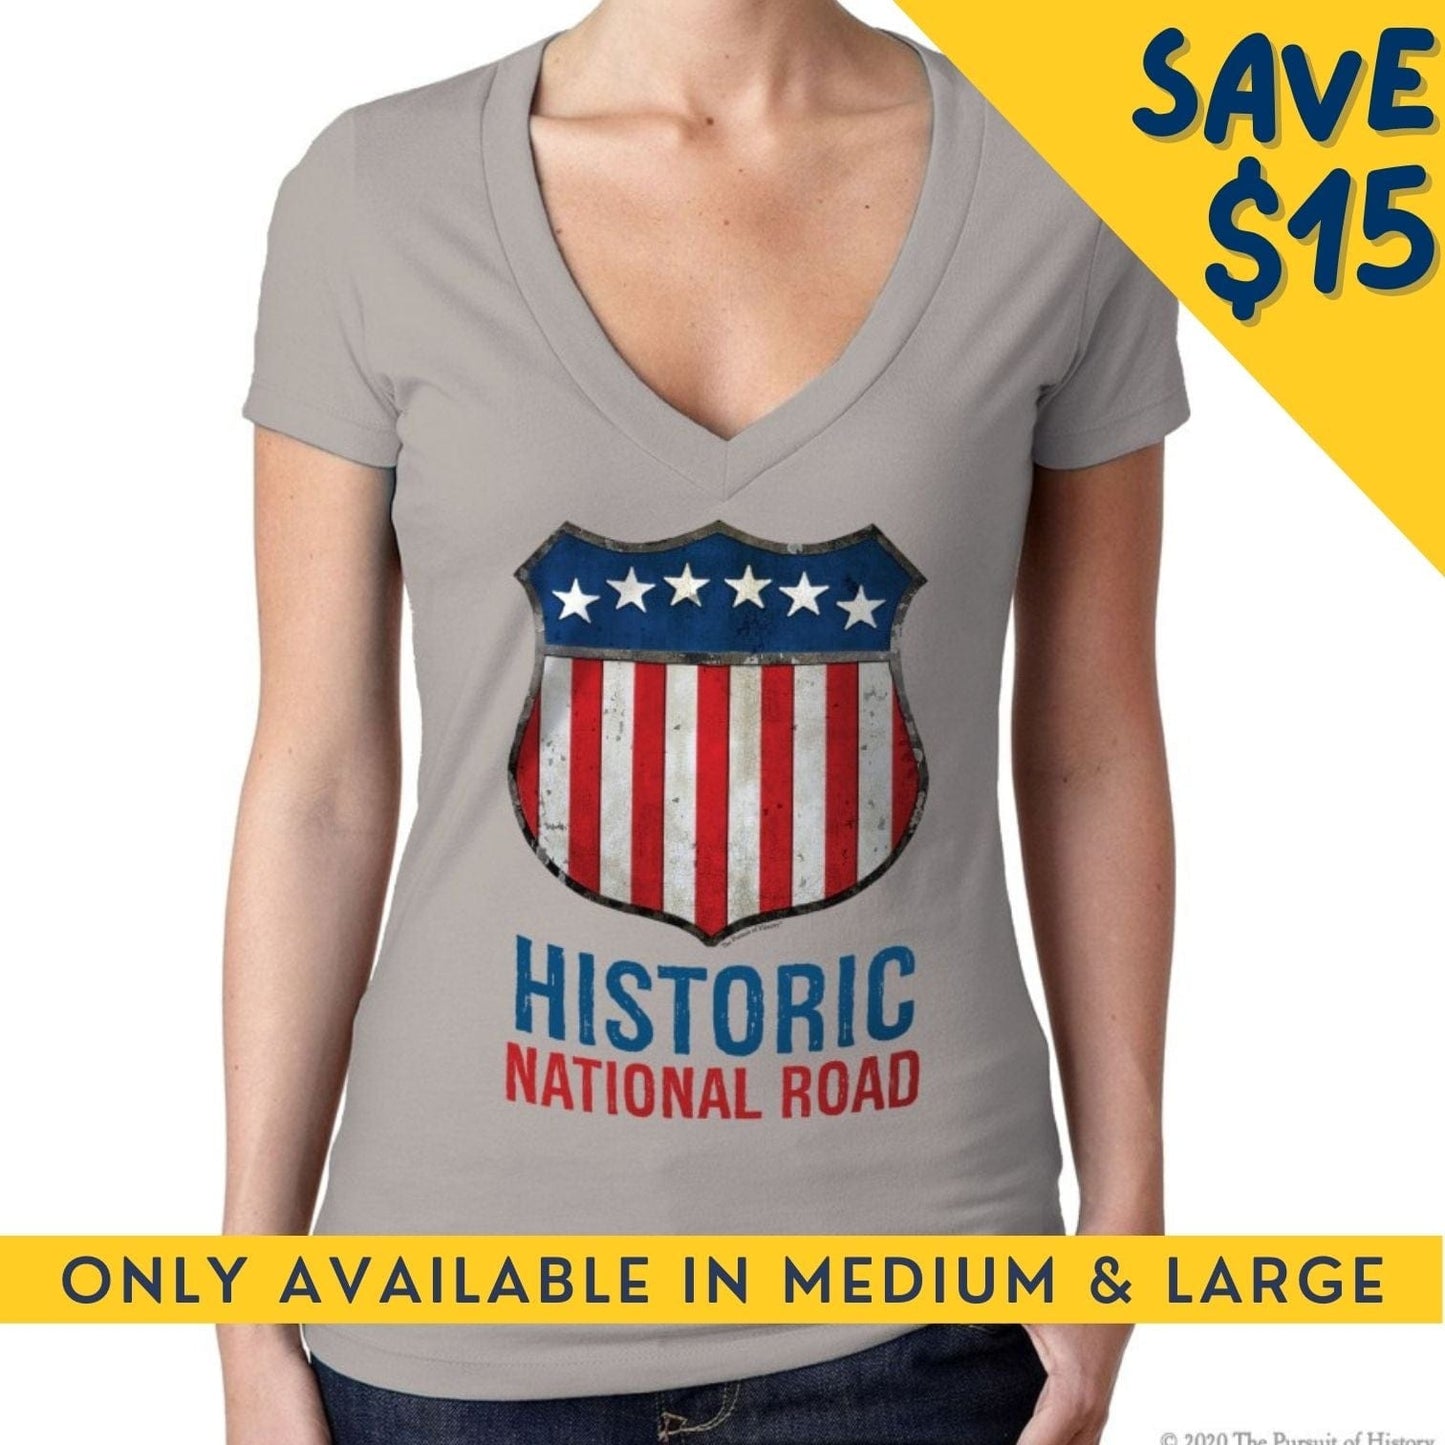 "Historic National Road" V-neck shirt — Only one left